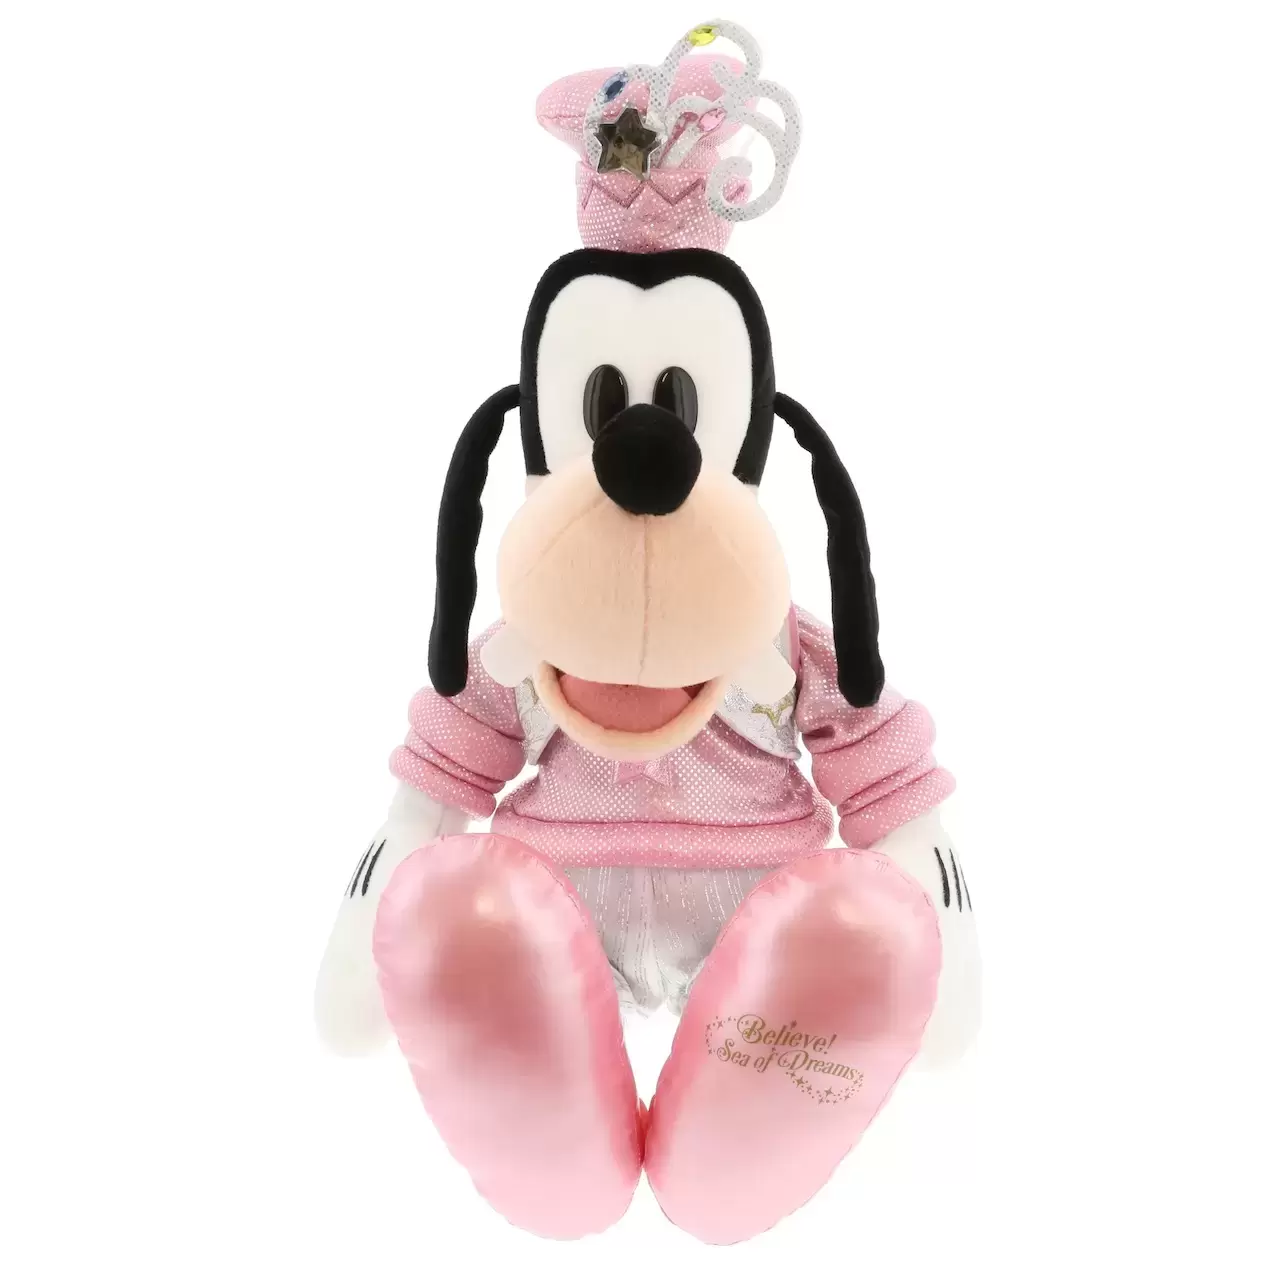 Peluches Disney Store - Mickey And Friends - Goofy [Tokyo Disneysea. Believe! sea of dreams]